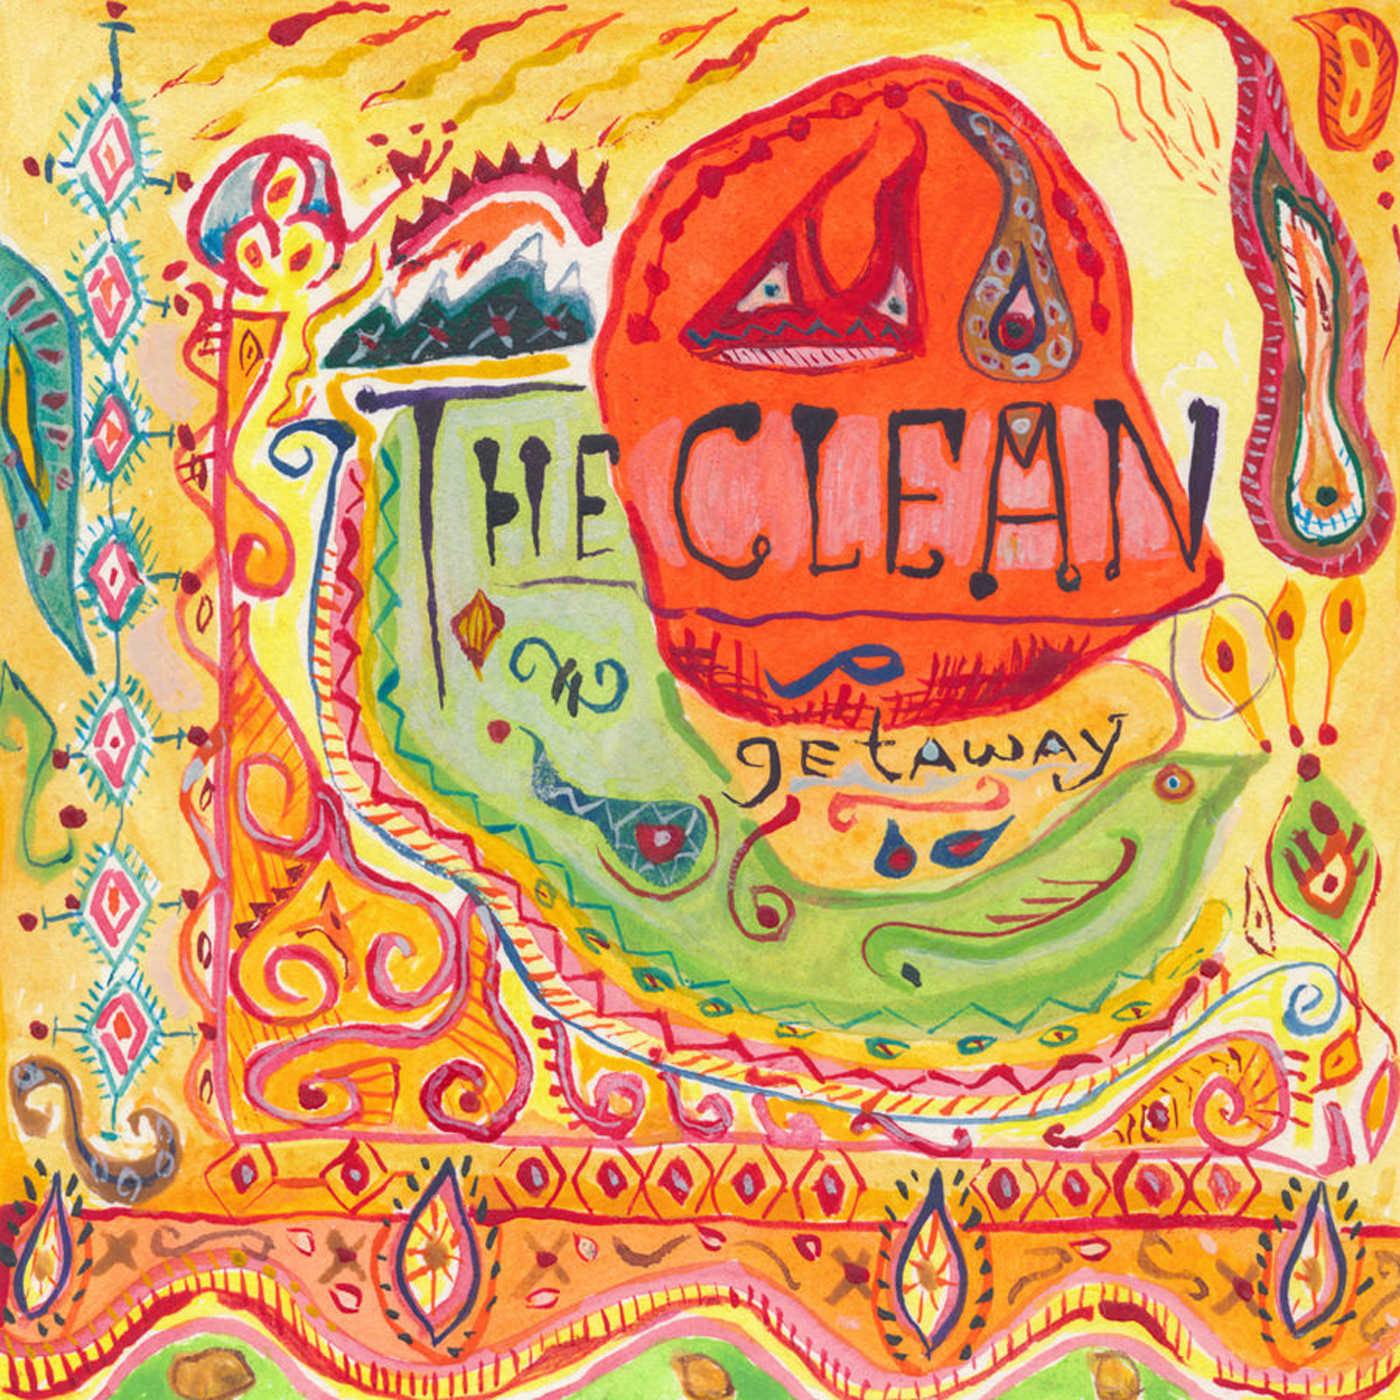 The Clean - Getaway (Reissue + bonus CD) - 2xCD